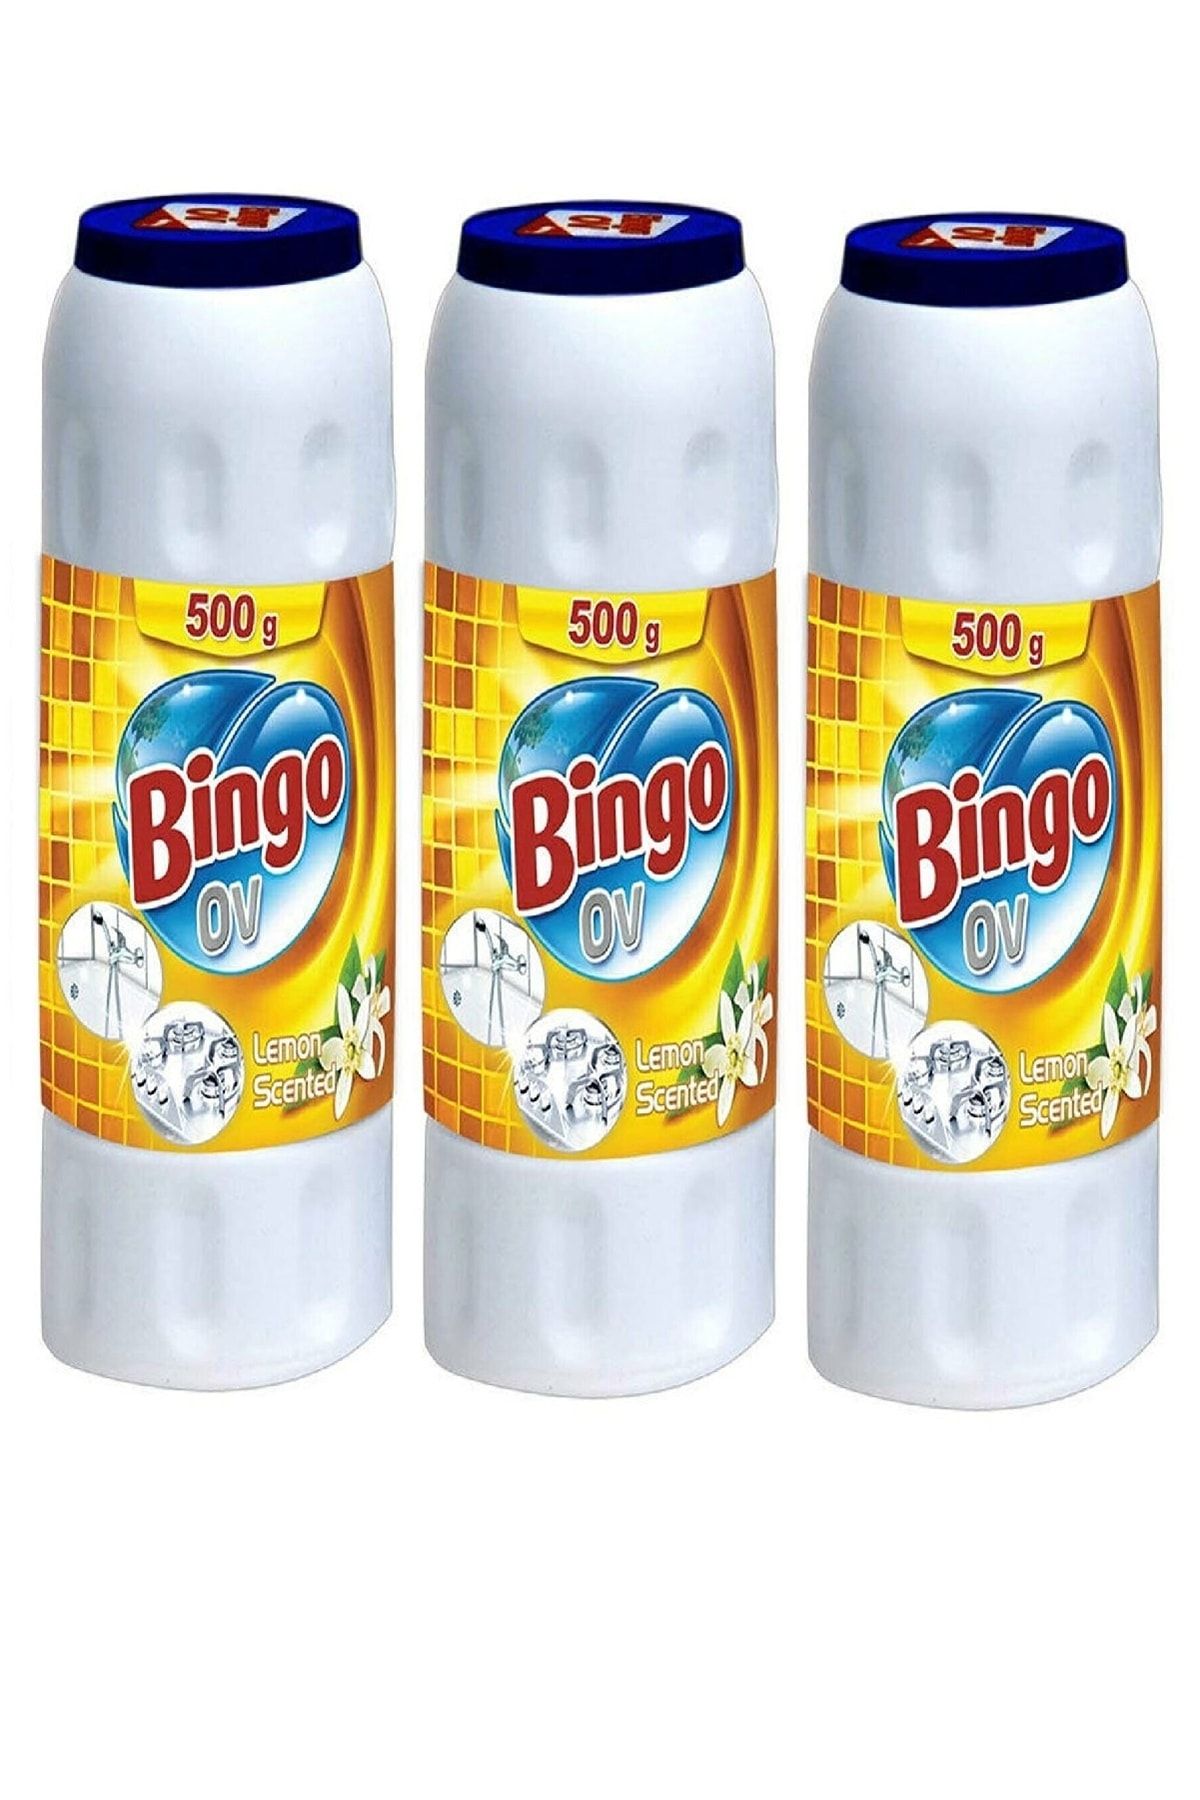 Bingo Ovma Mekanik Temizleme Tozu Limon 500g X3 Adet